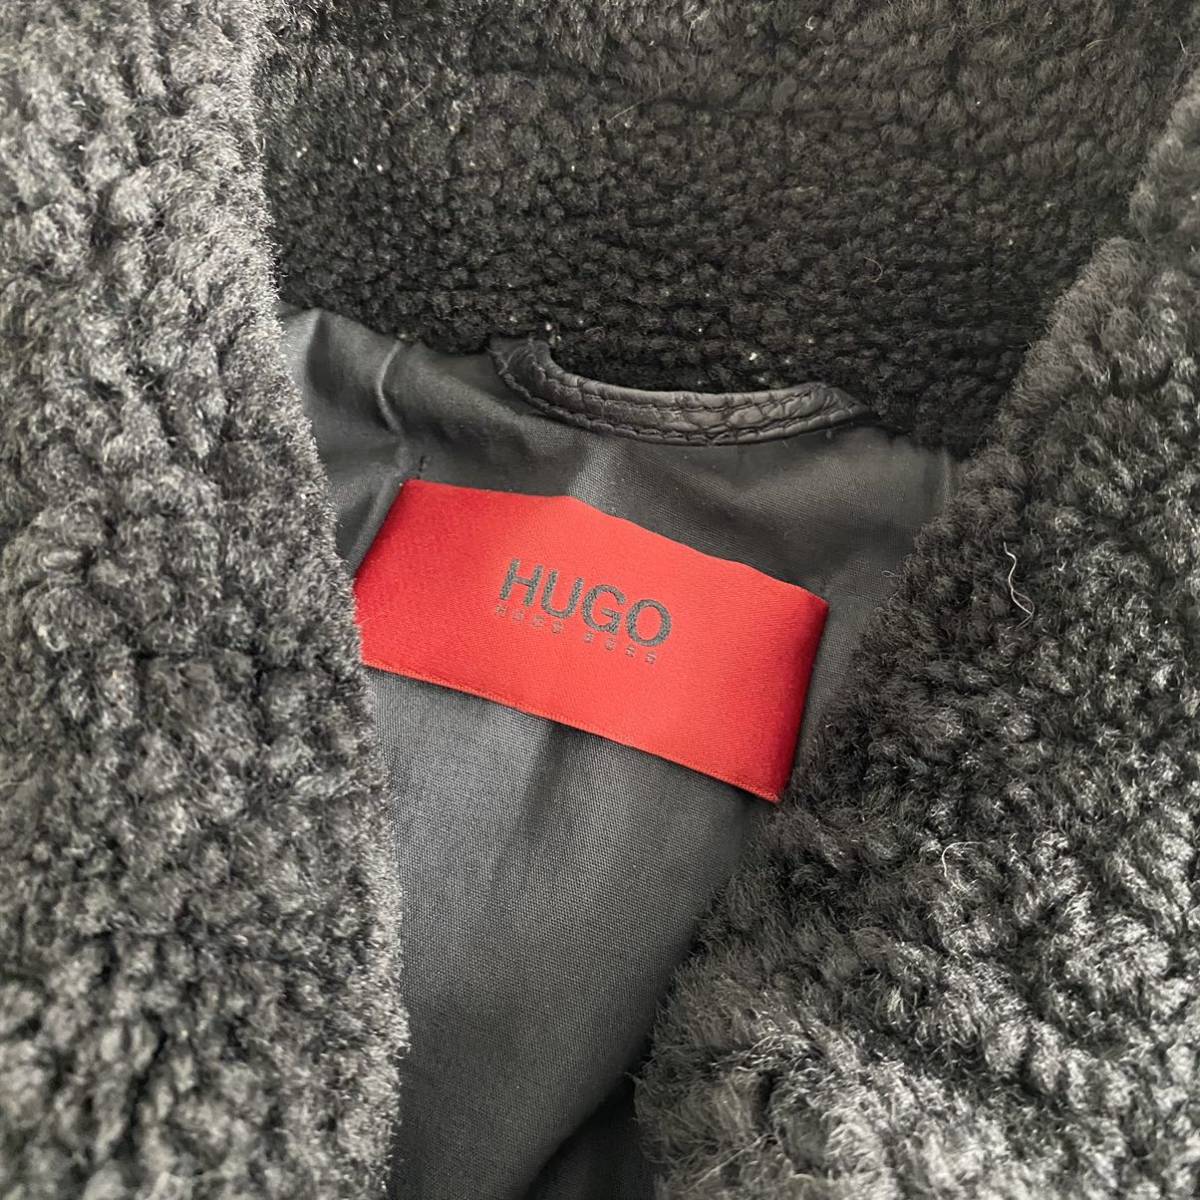 052i12 HUGO BOSS Hugo Boss Ram × Buffalo leather jacket size S black men's outer autumn winter sheep leather water cow leather leather